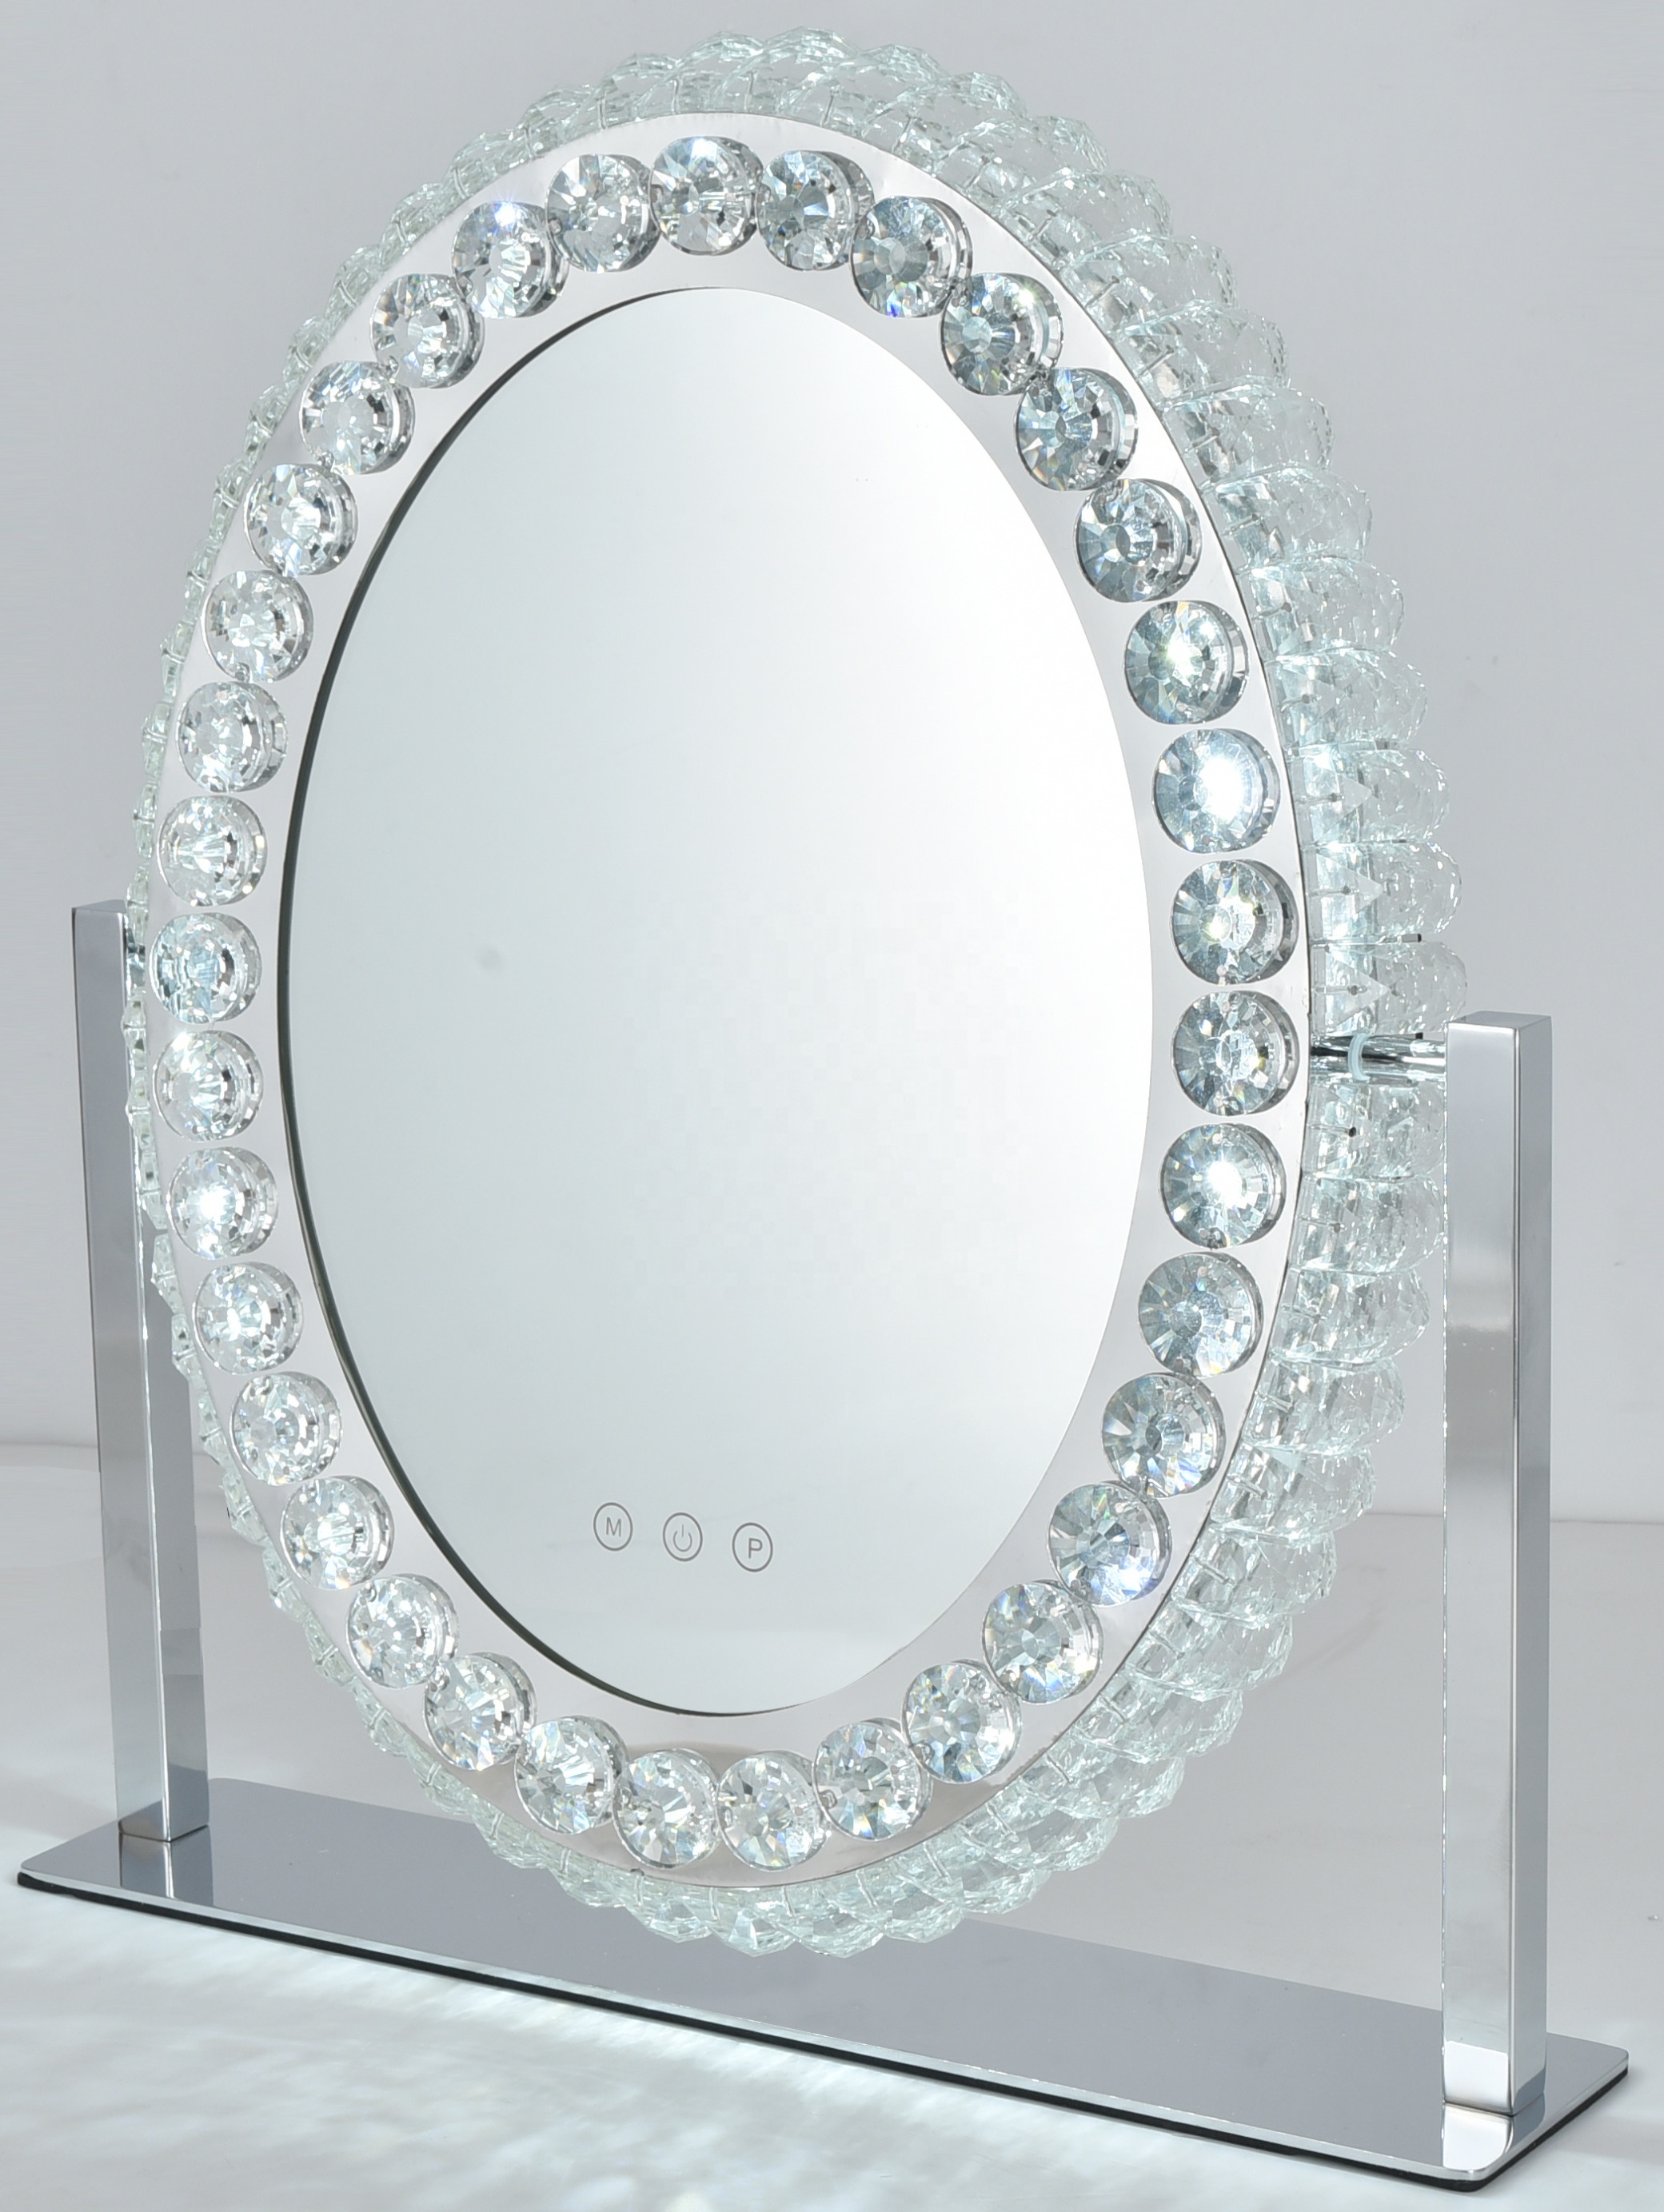 /uploads/image/2022/04/27/Led Lighted Hollywood Makeup Mirror with Oval Shape 013.jpg